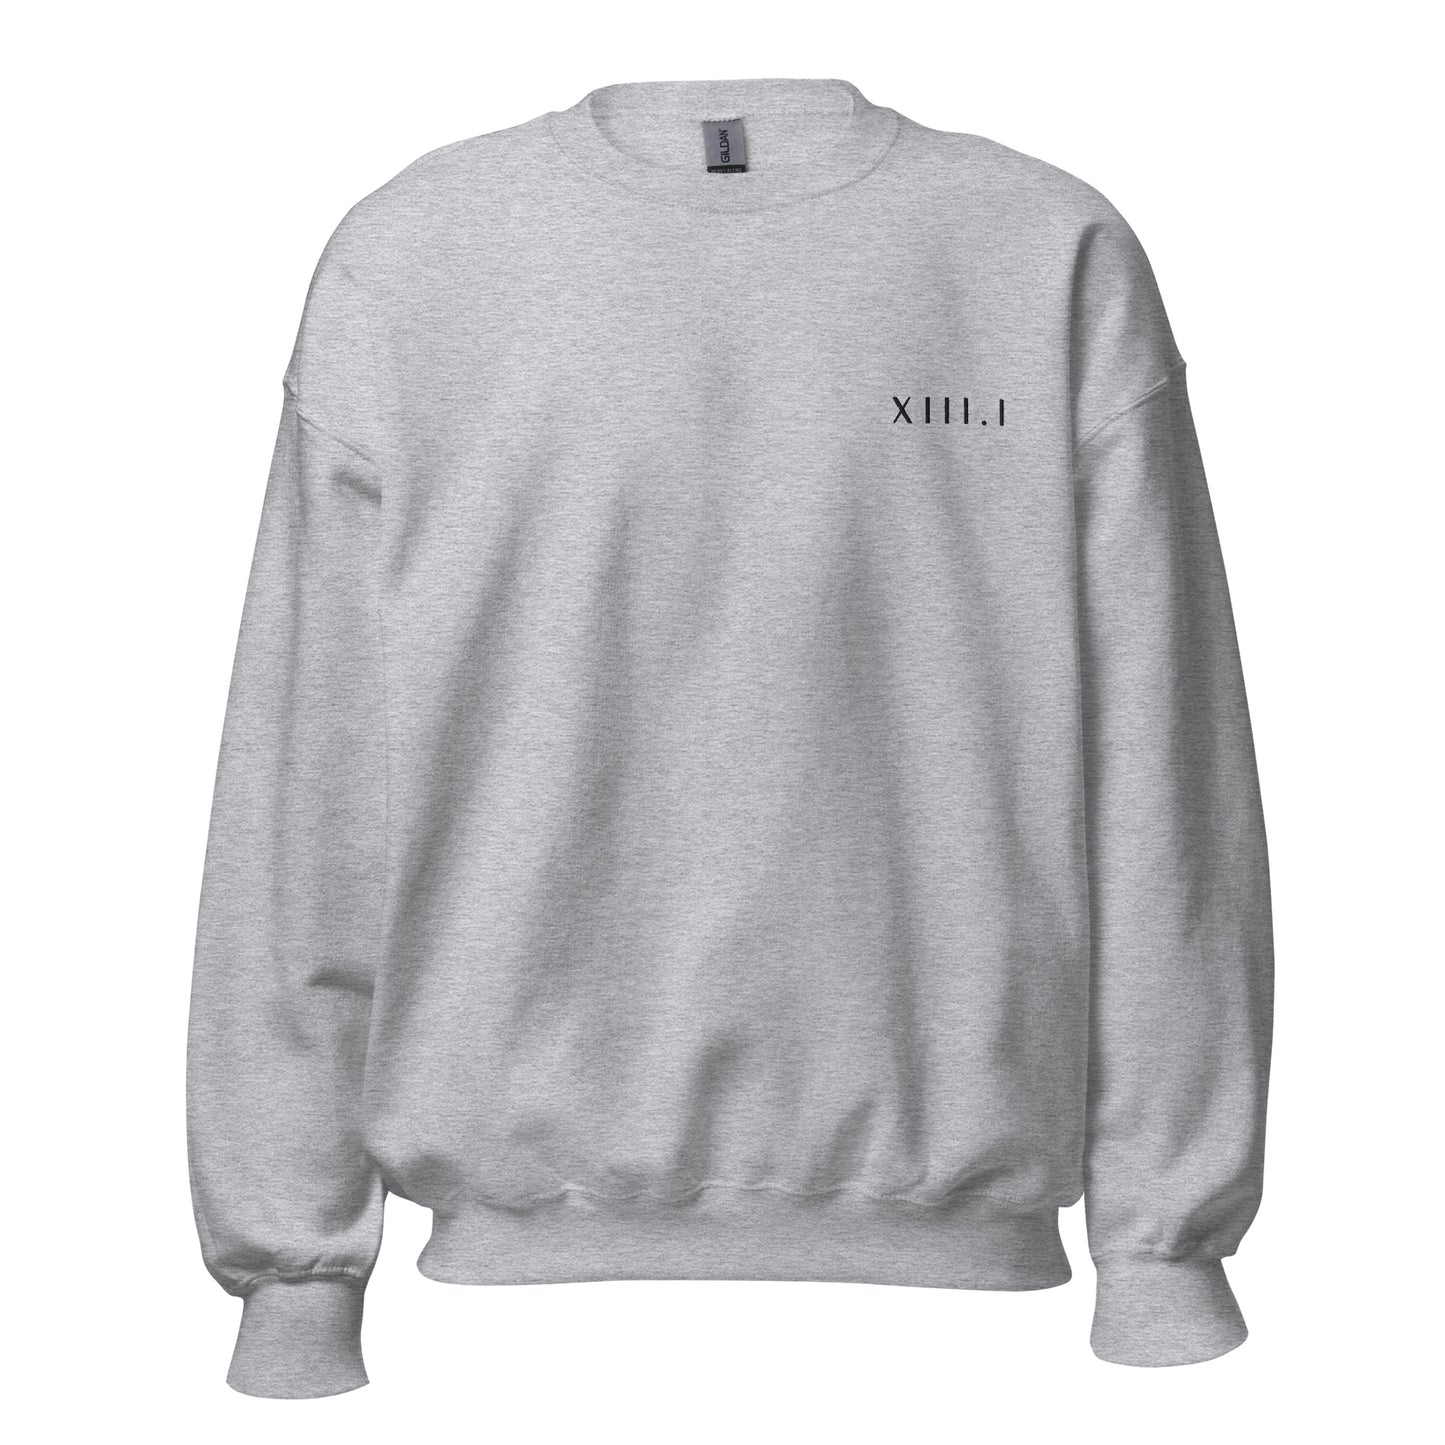 light grey unisex sweatshirt with XIII.I 13.1 half marathon in roman numerals embroidered in black writing